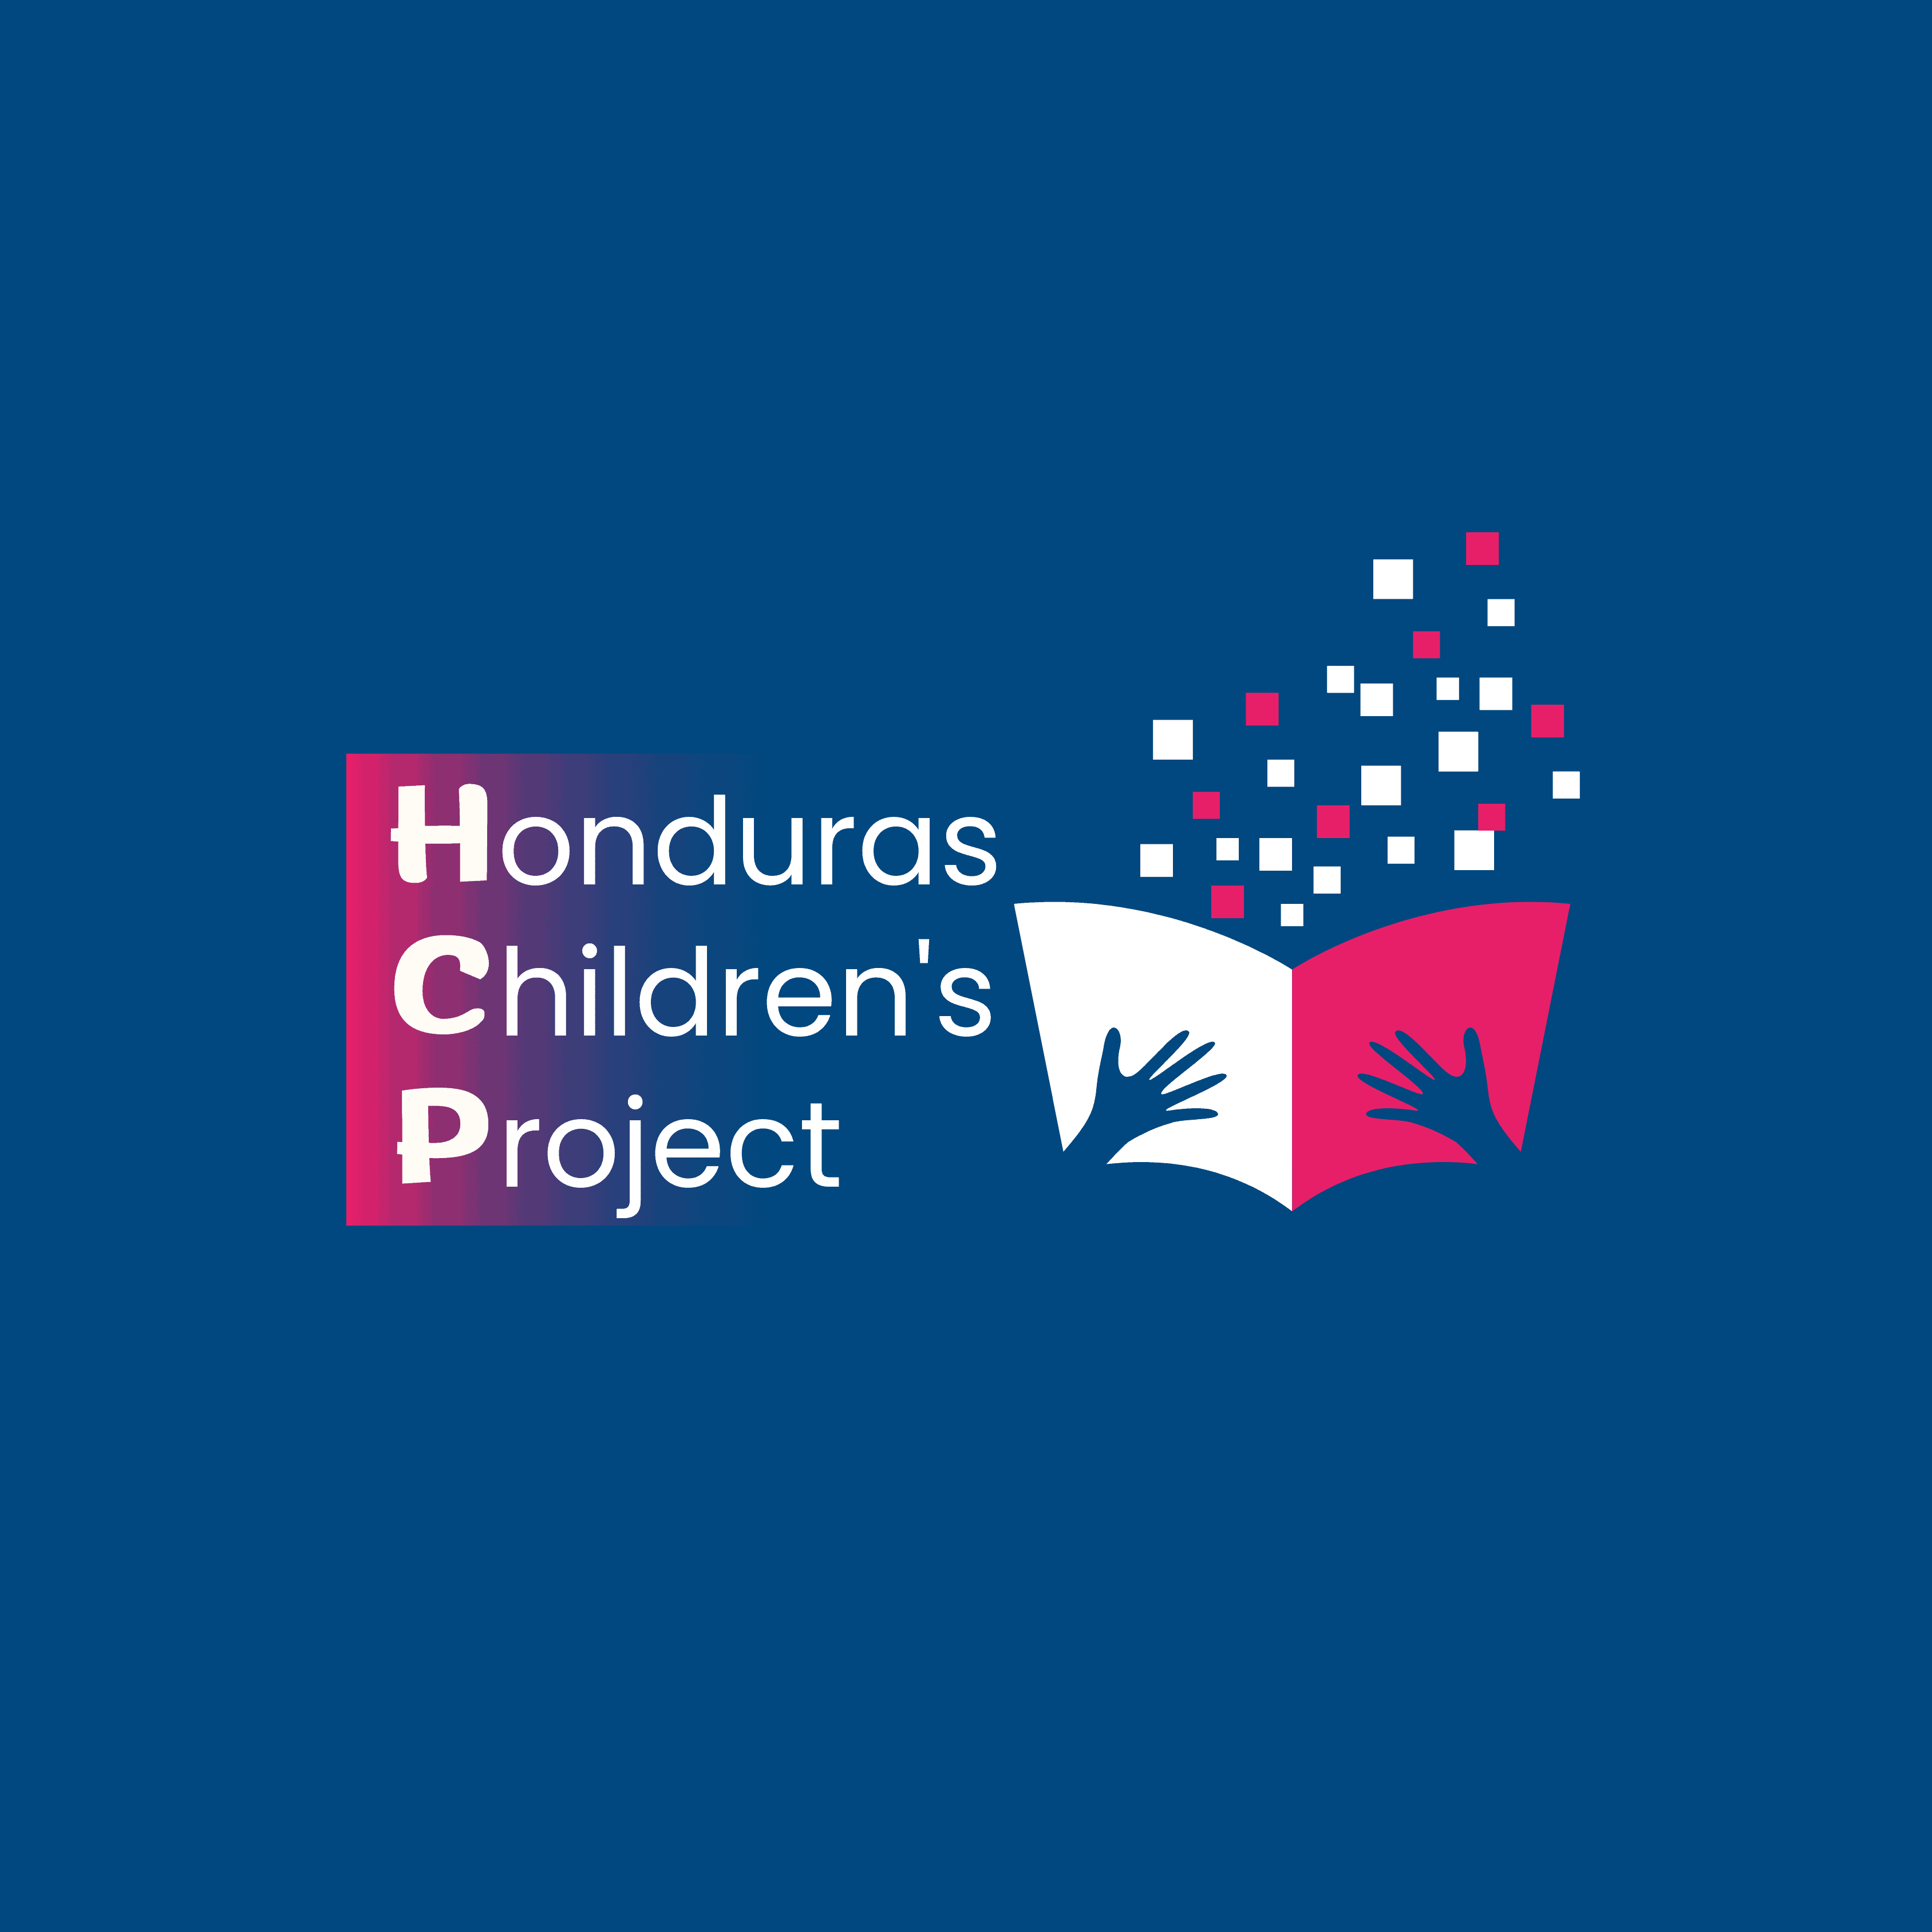 Honduras Children’s Project